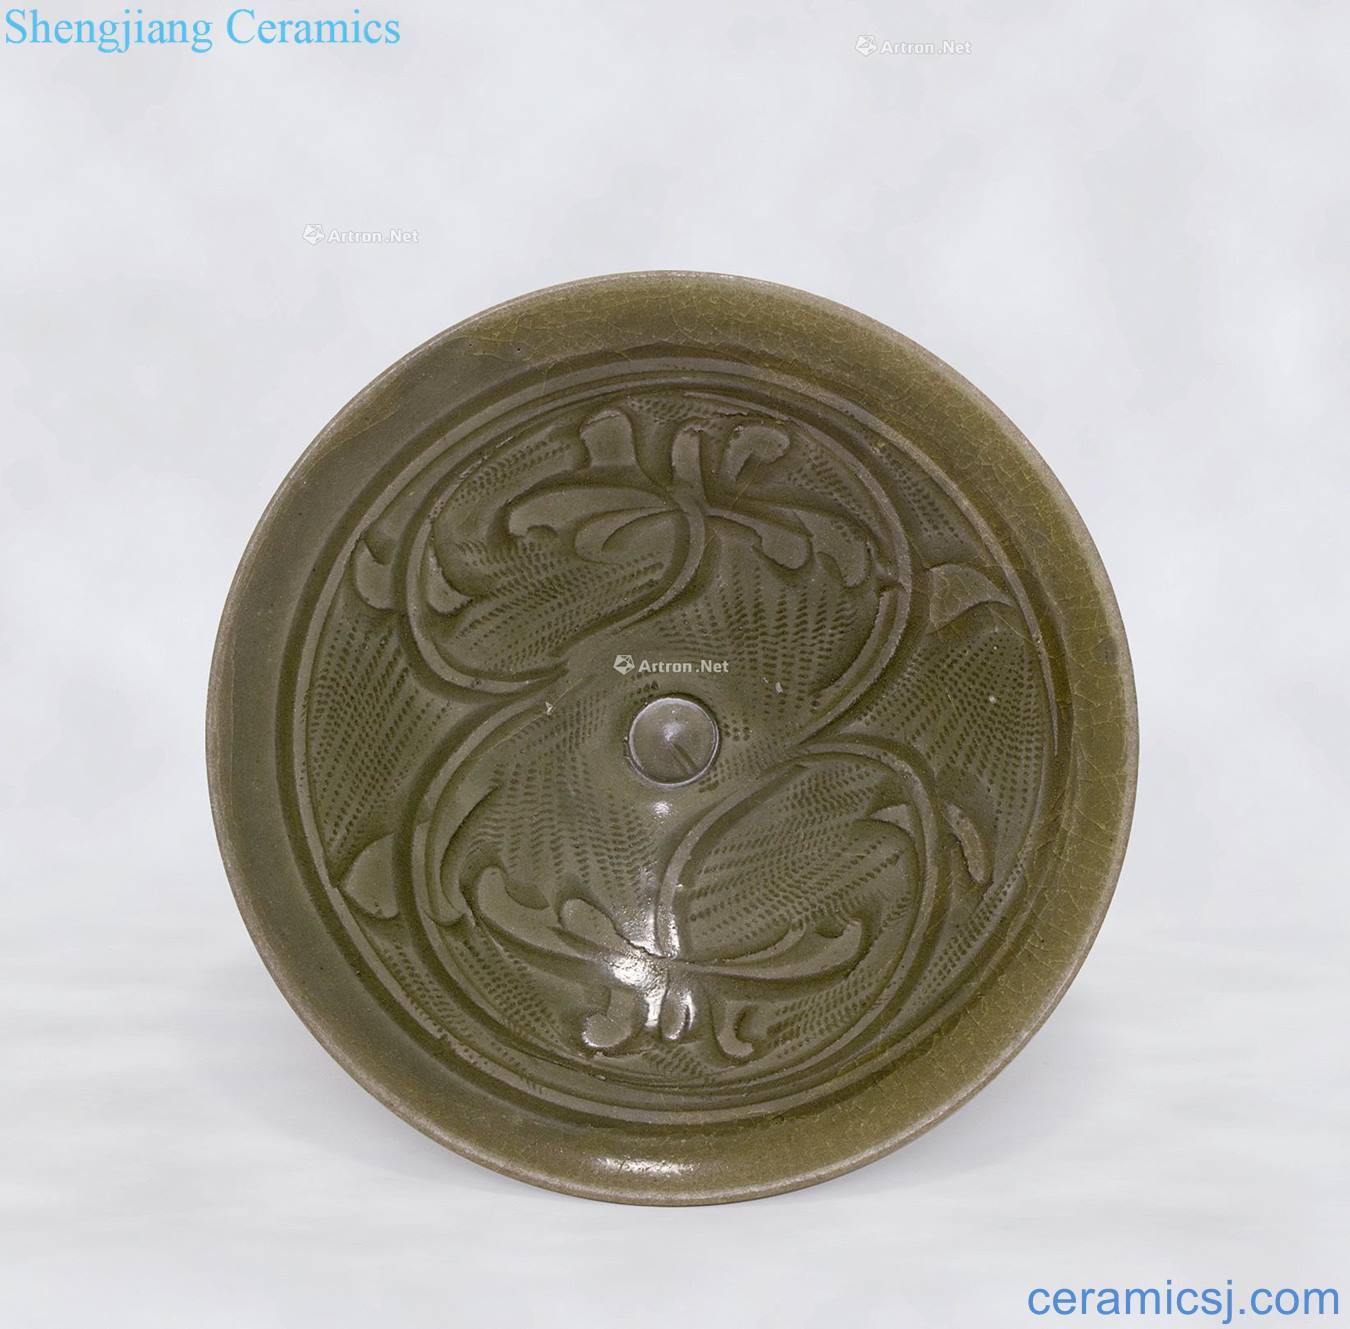 Song dynasty bead light blue glaze carving grate flower bowl (a)